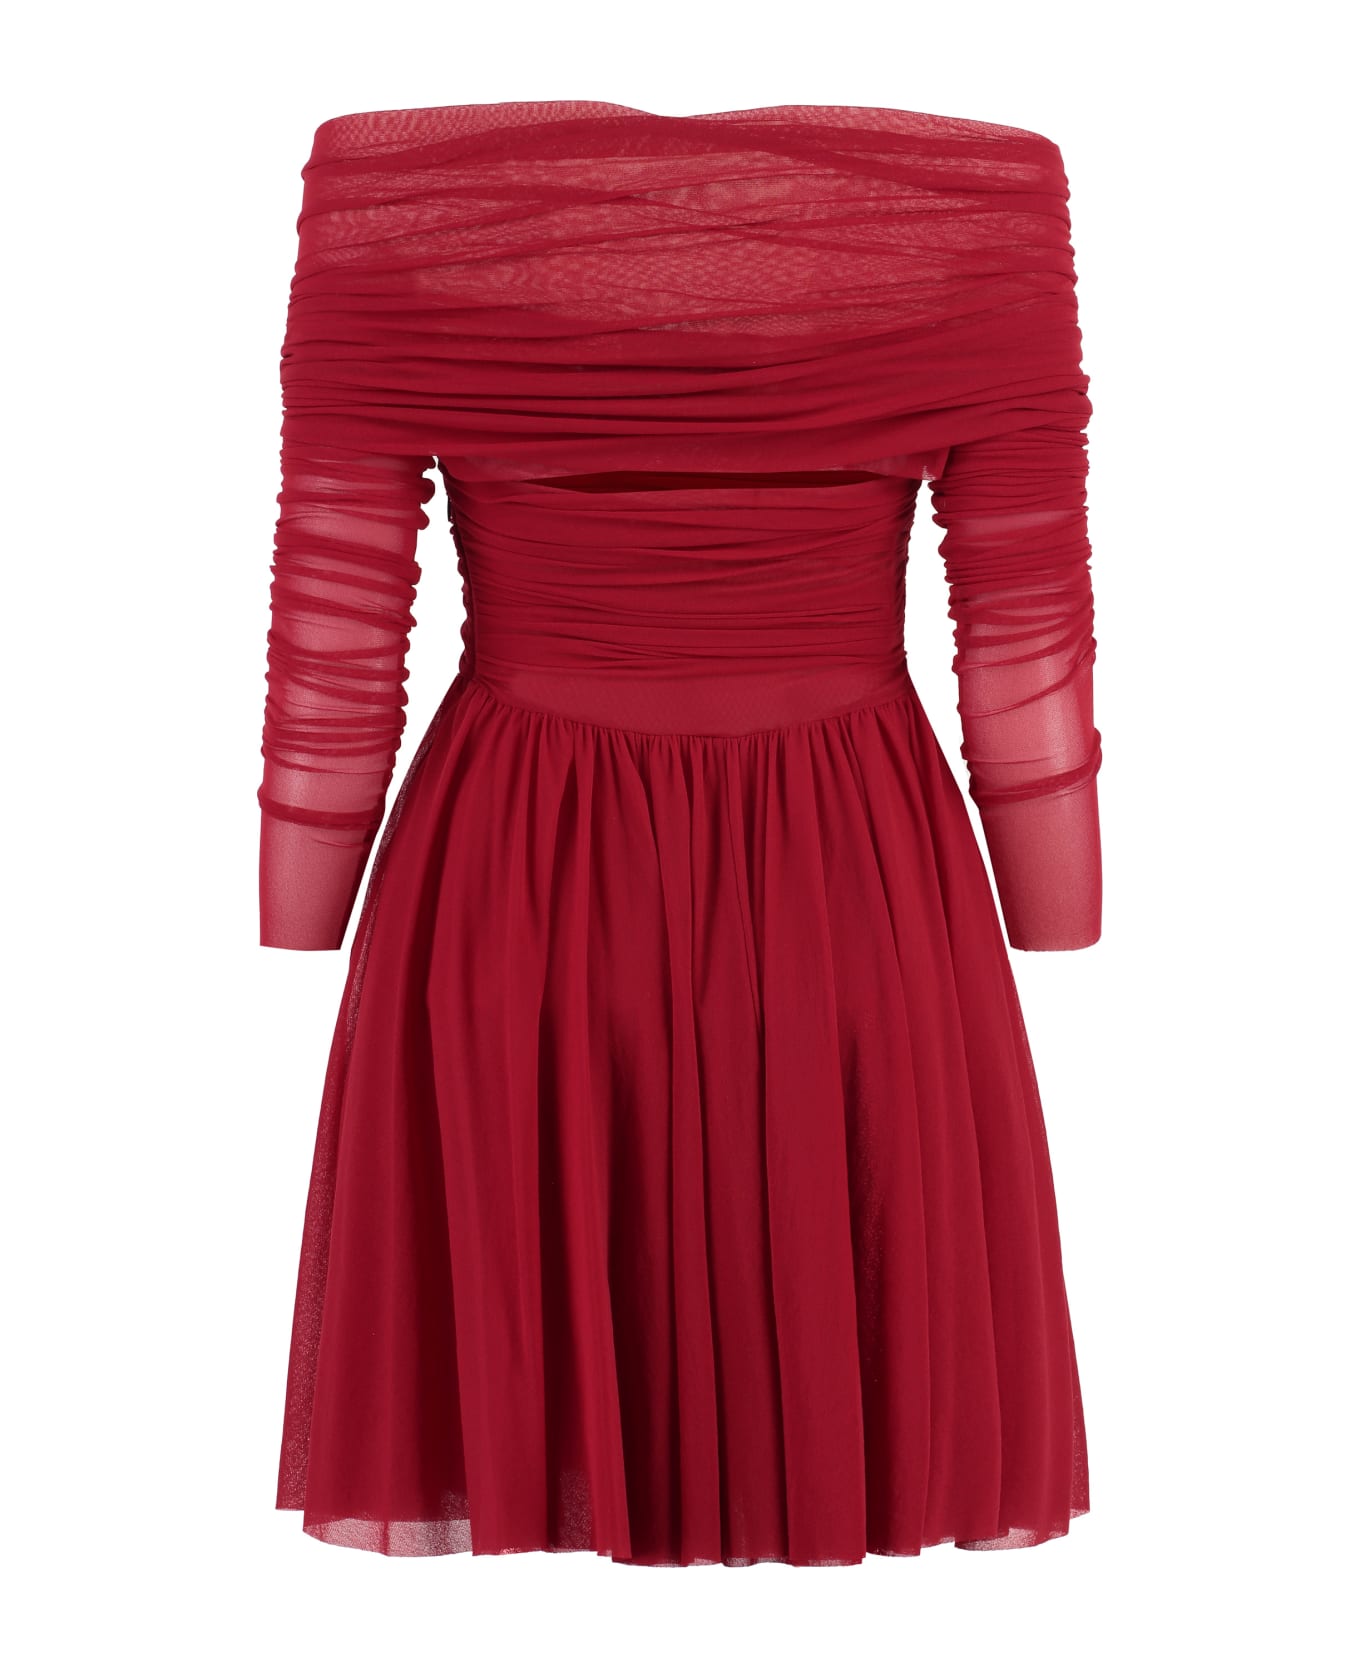 Philosophy di Lorenzo Serafini Tulle Dress - red